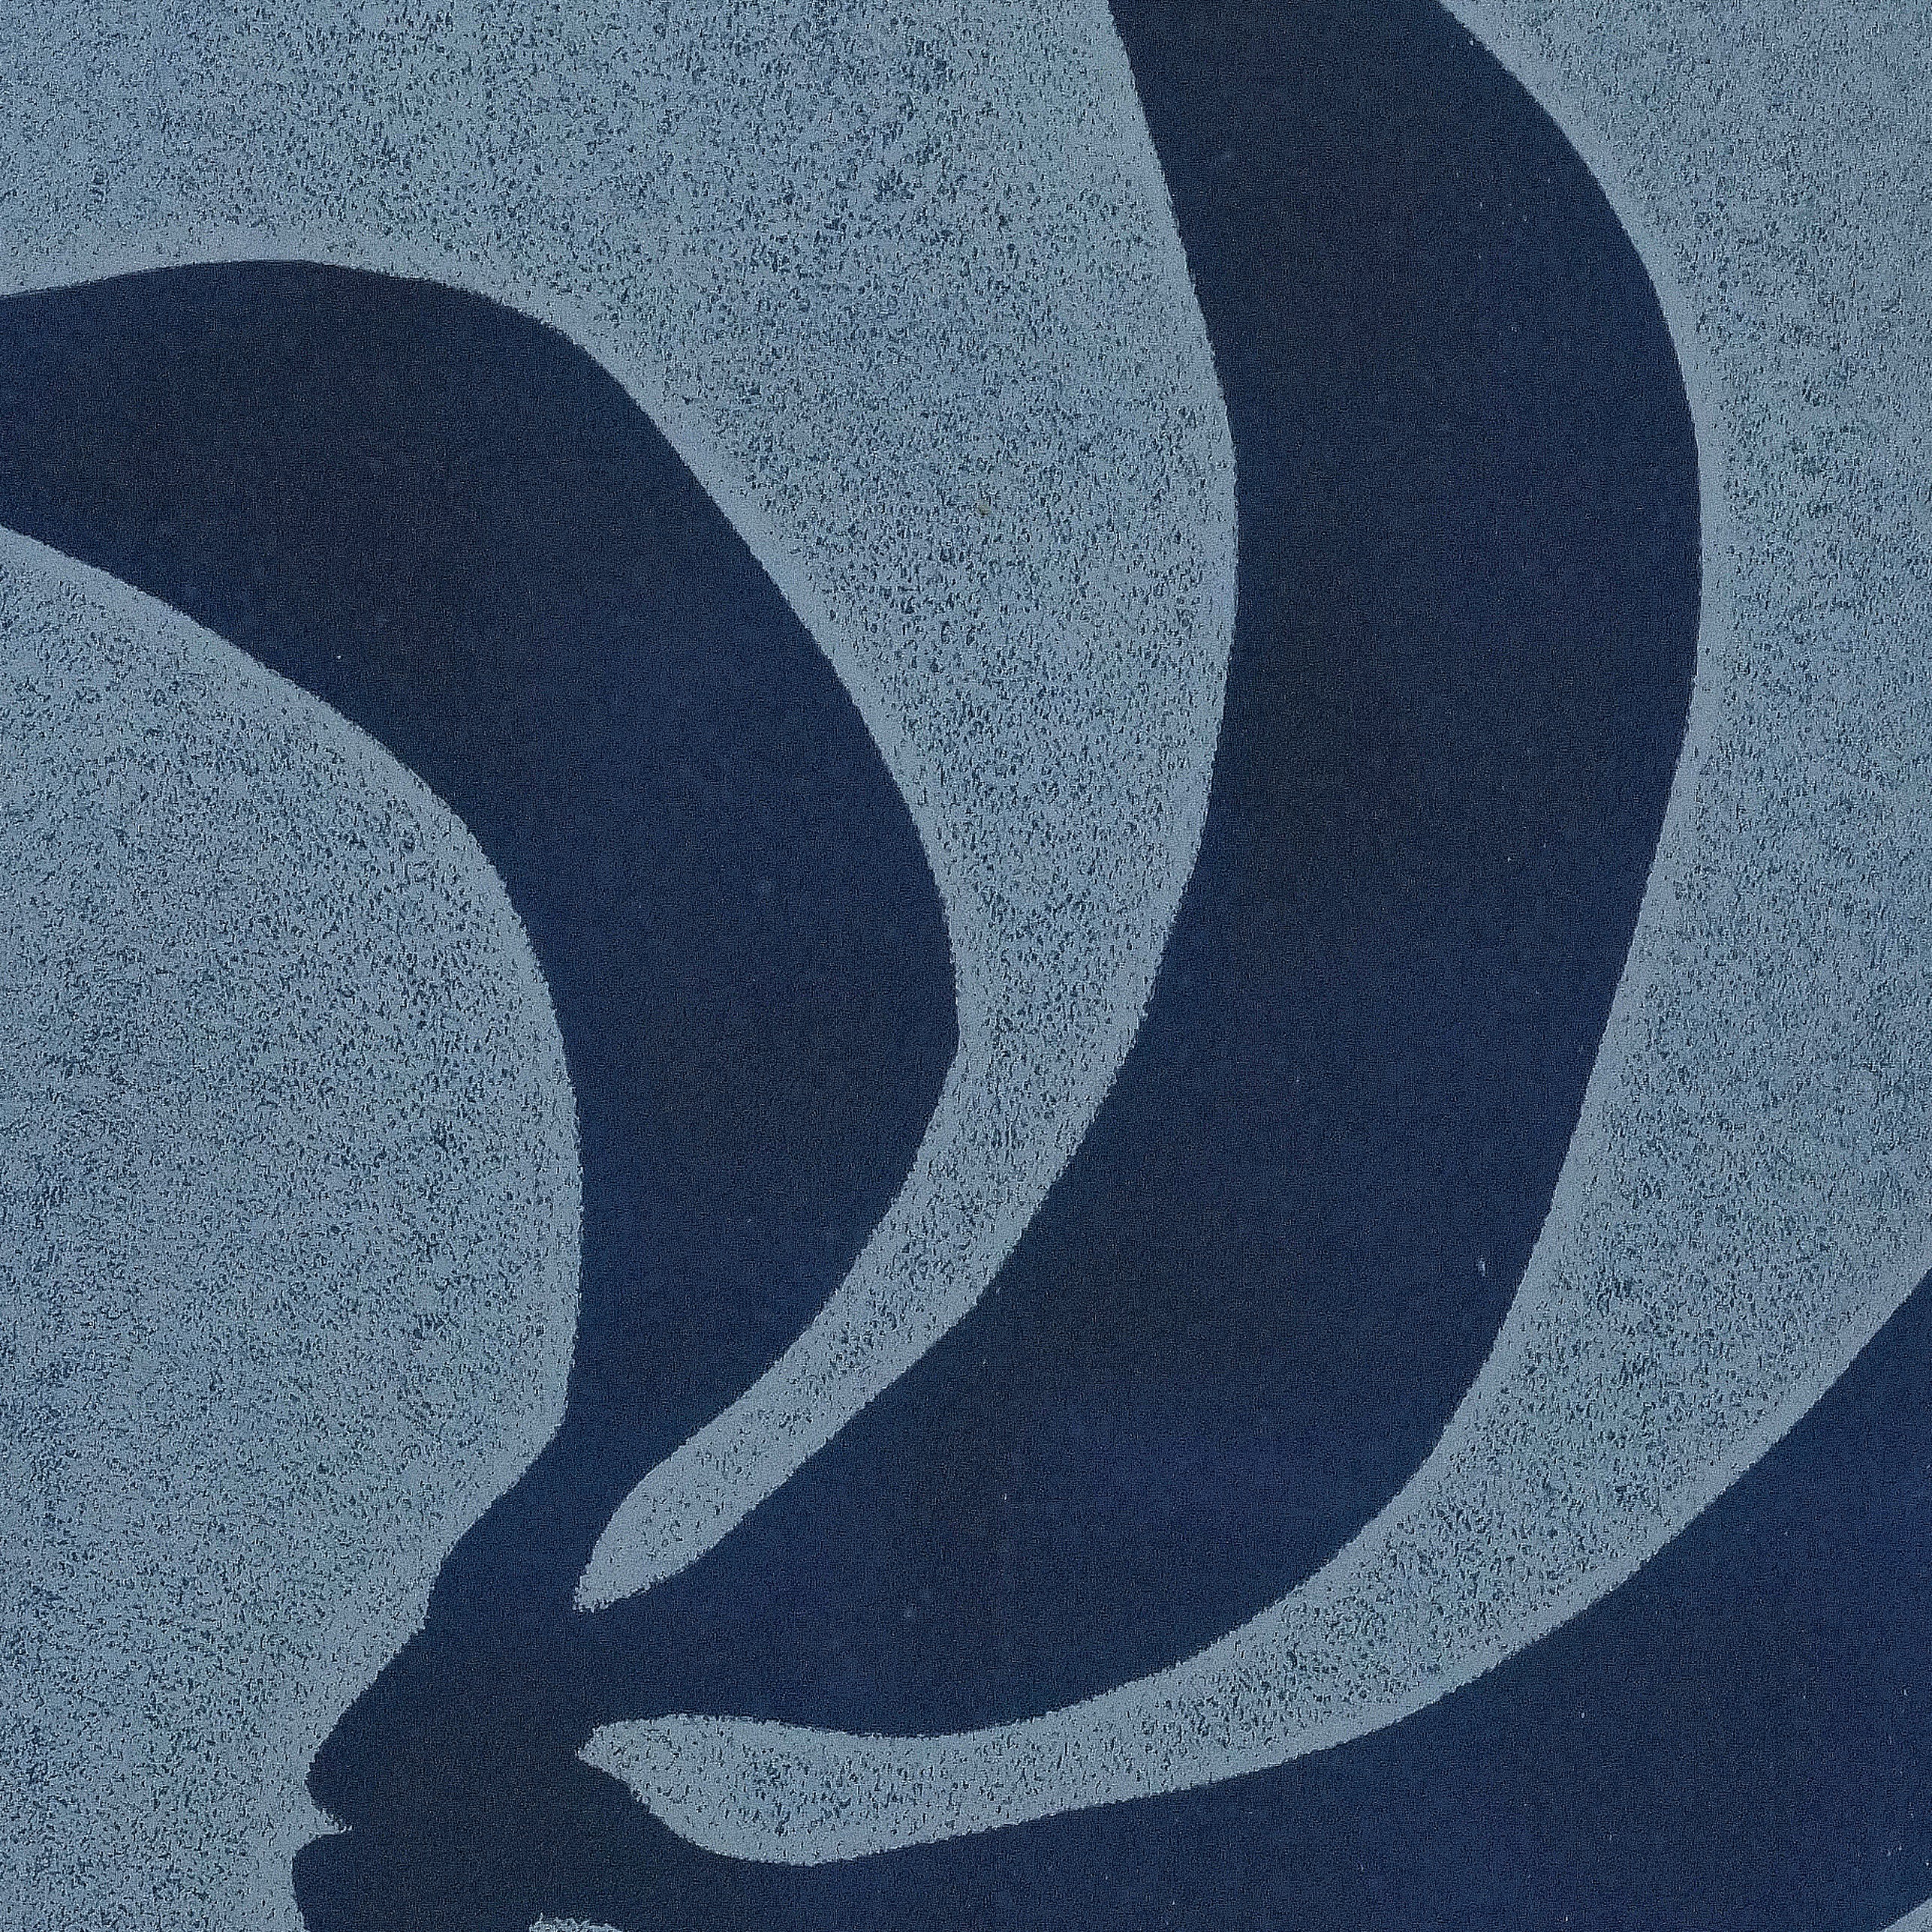 Navy blue wall art in curved shapes | monoprint | Enkel Art Studio